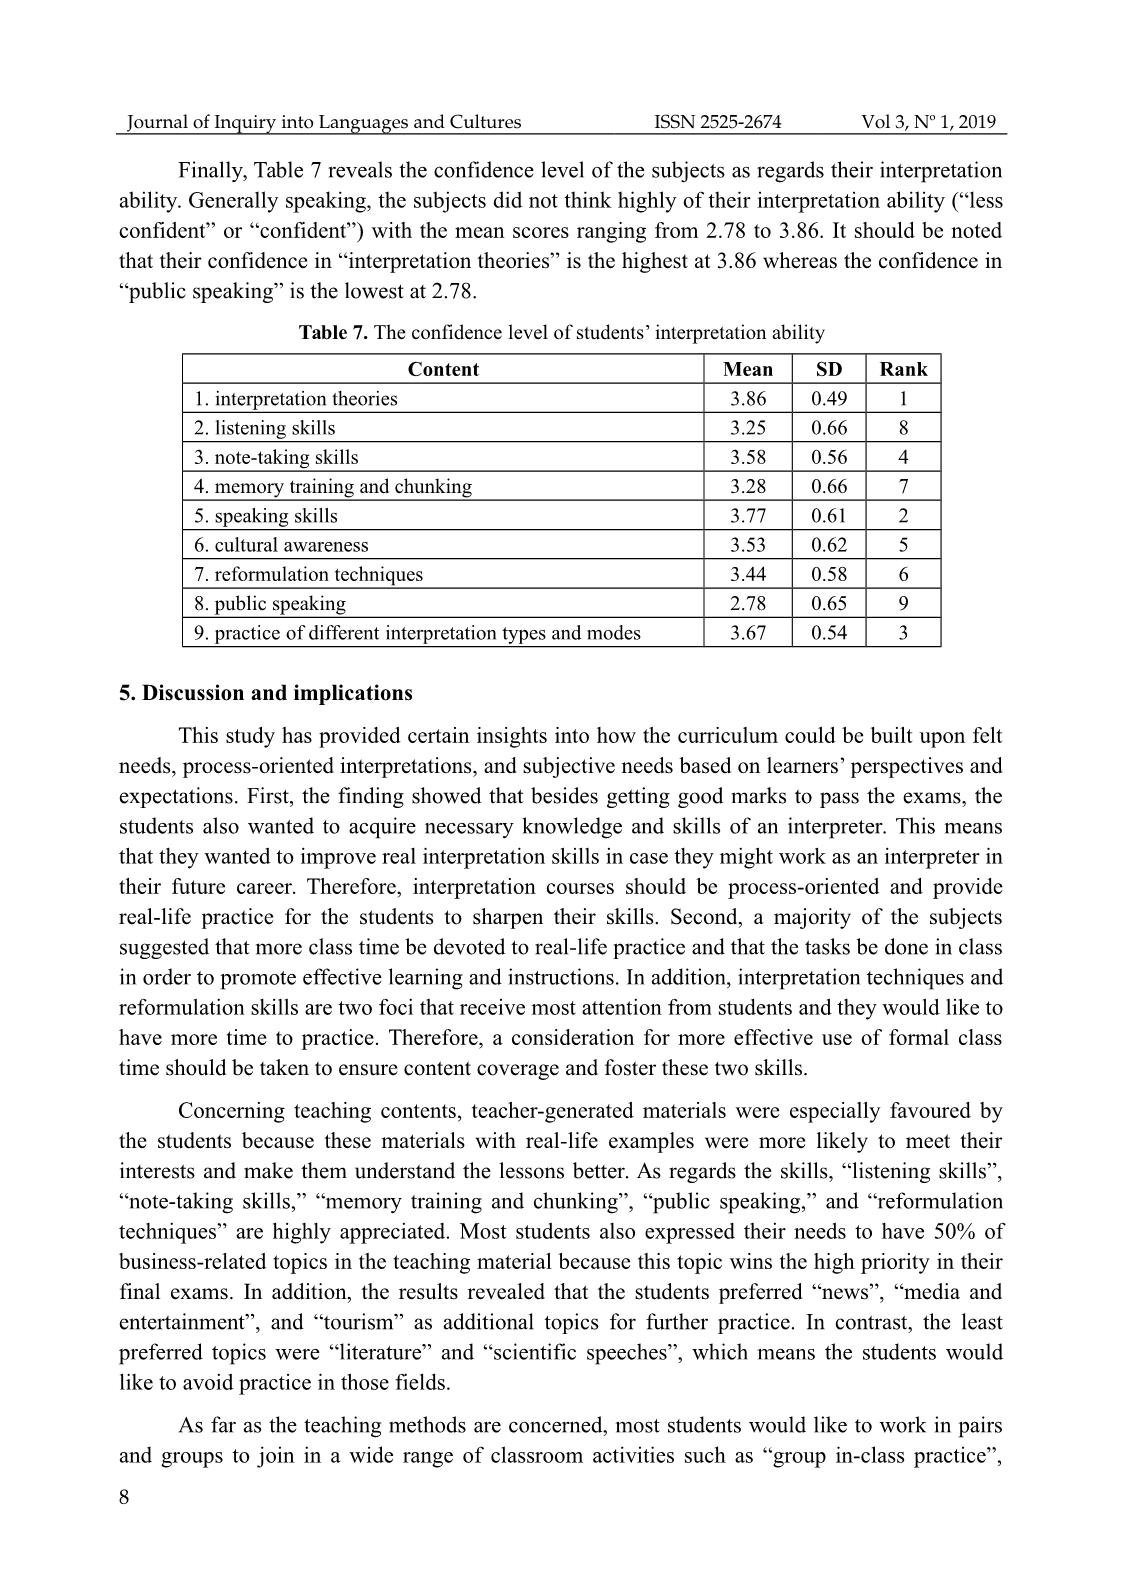 Analyzing undergraduates’ needs for an improvement in interpreter training curriculum at banking university HCMC, Vietnam trang 8